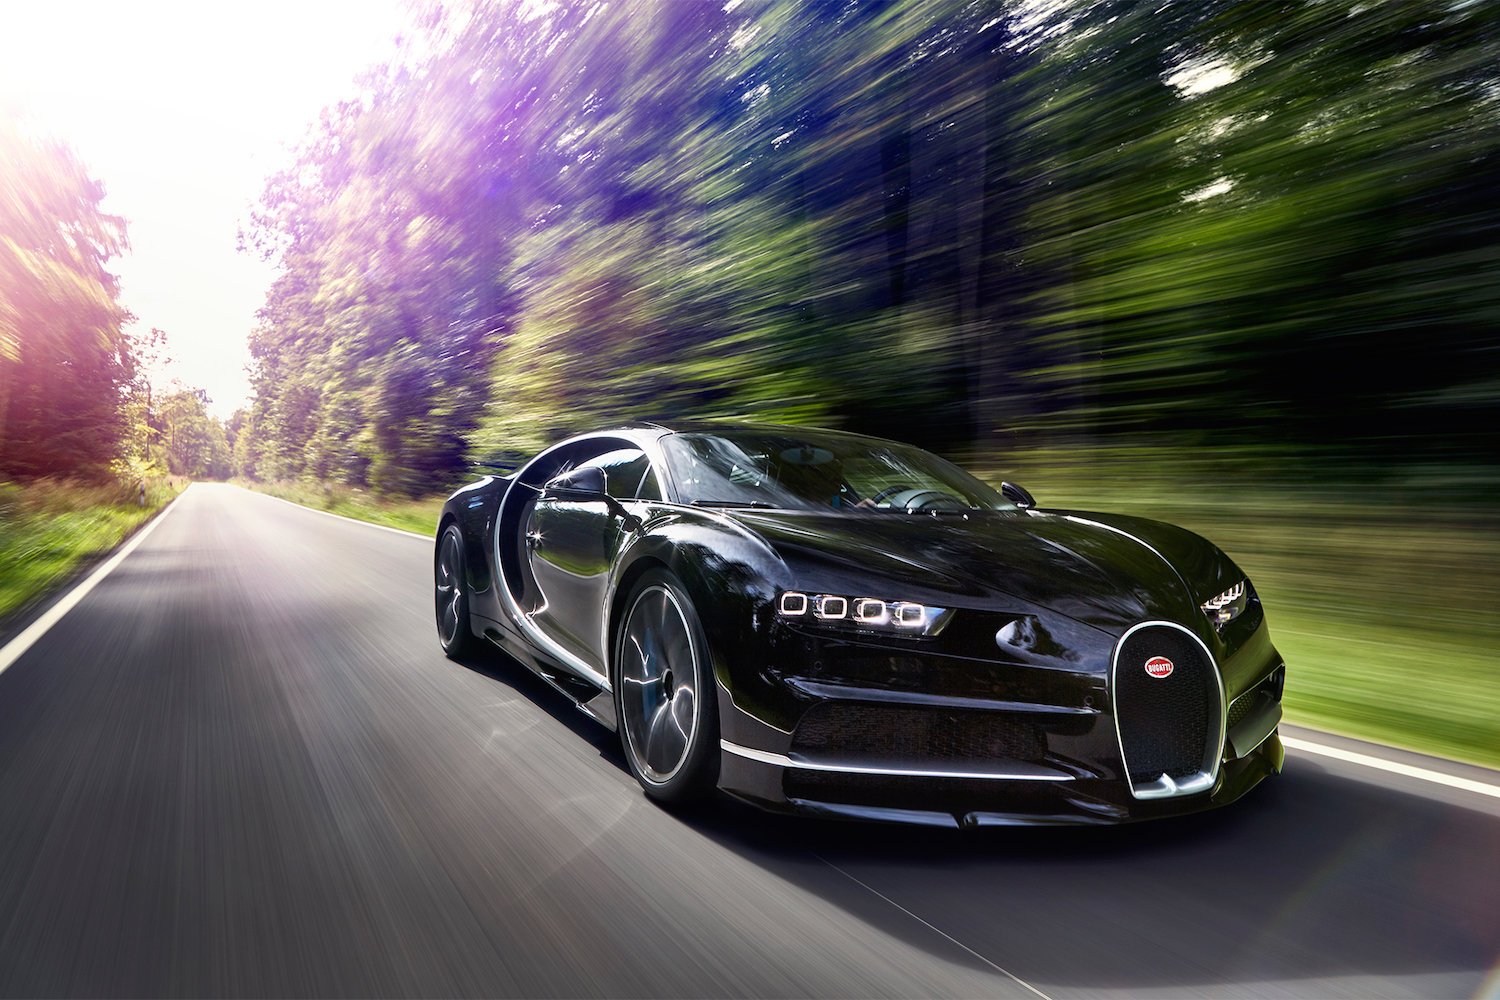 Bugatti Chiron Sets World Record 0 to 249 to 0 MPH